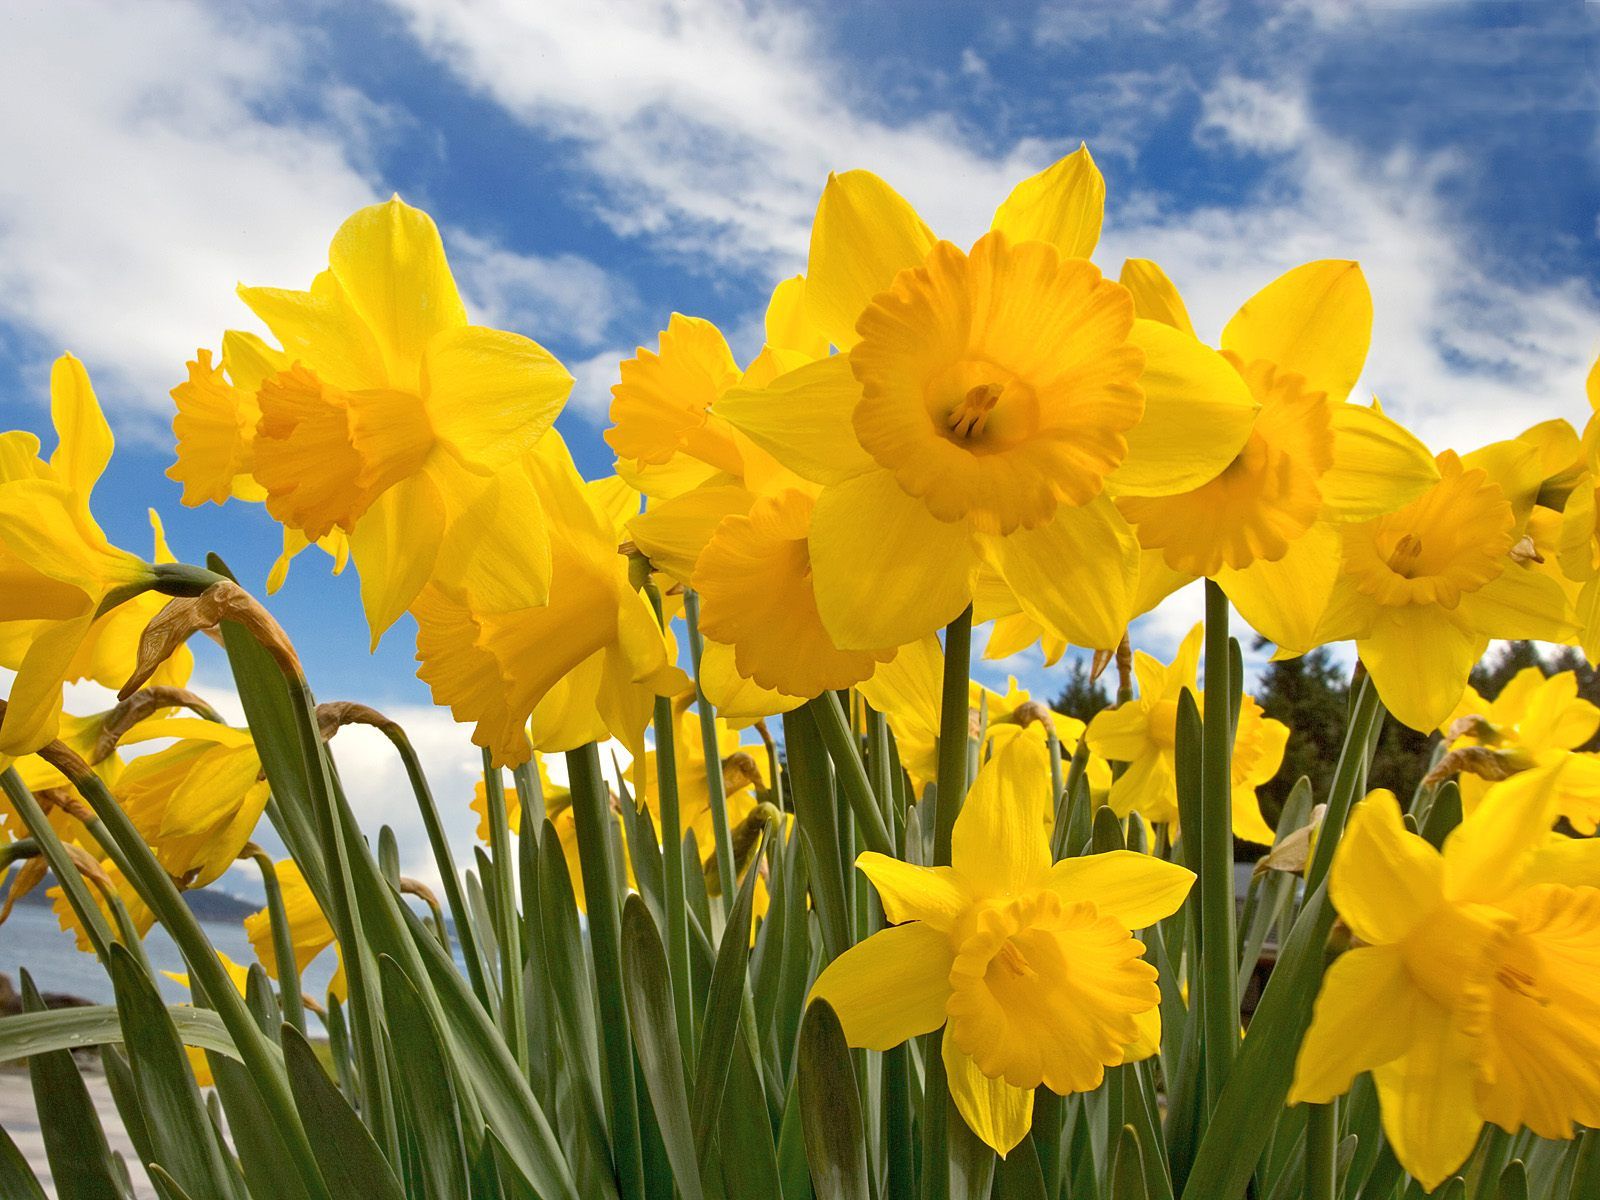 Welsh Cartoon Daffodil